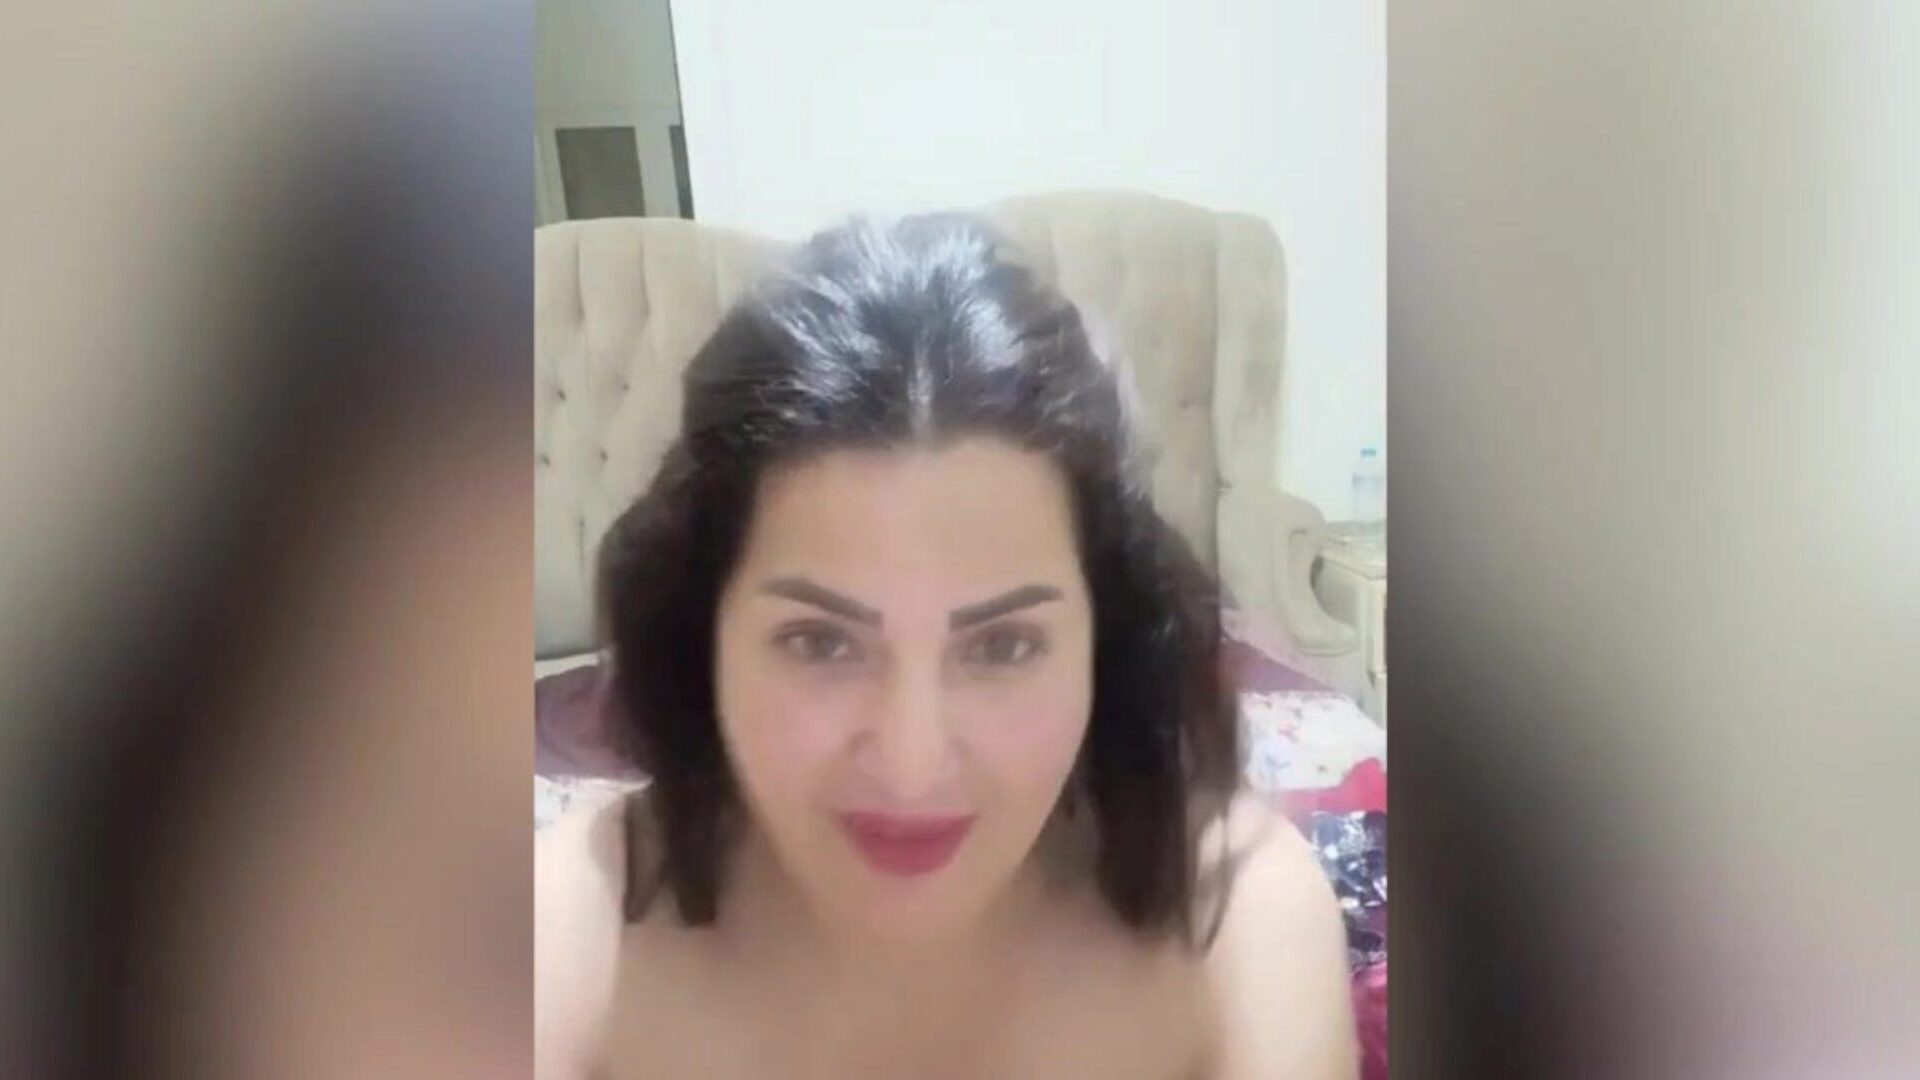 actrice égyptienne arabe fuck-a-thon sama el masry chaud masrya naar orgie arabe égyptienne par sama al-masry, qui est hawt asaaa, montrant ses gros bazookas et hawt grand gazoo masrya naar